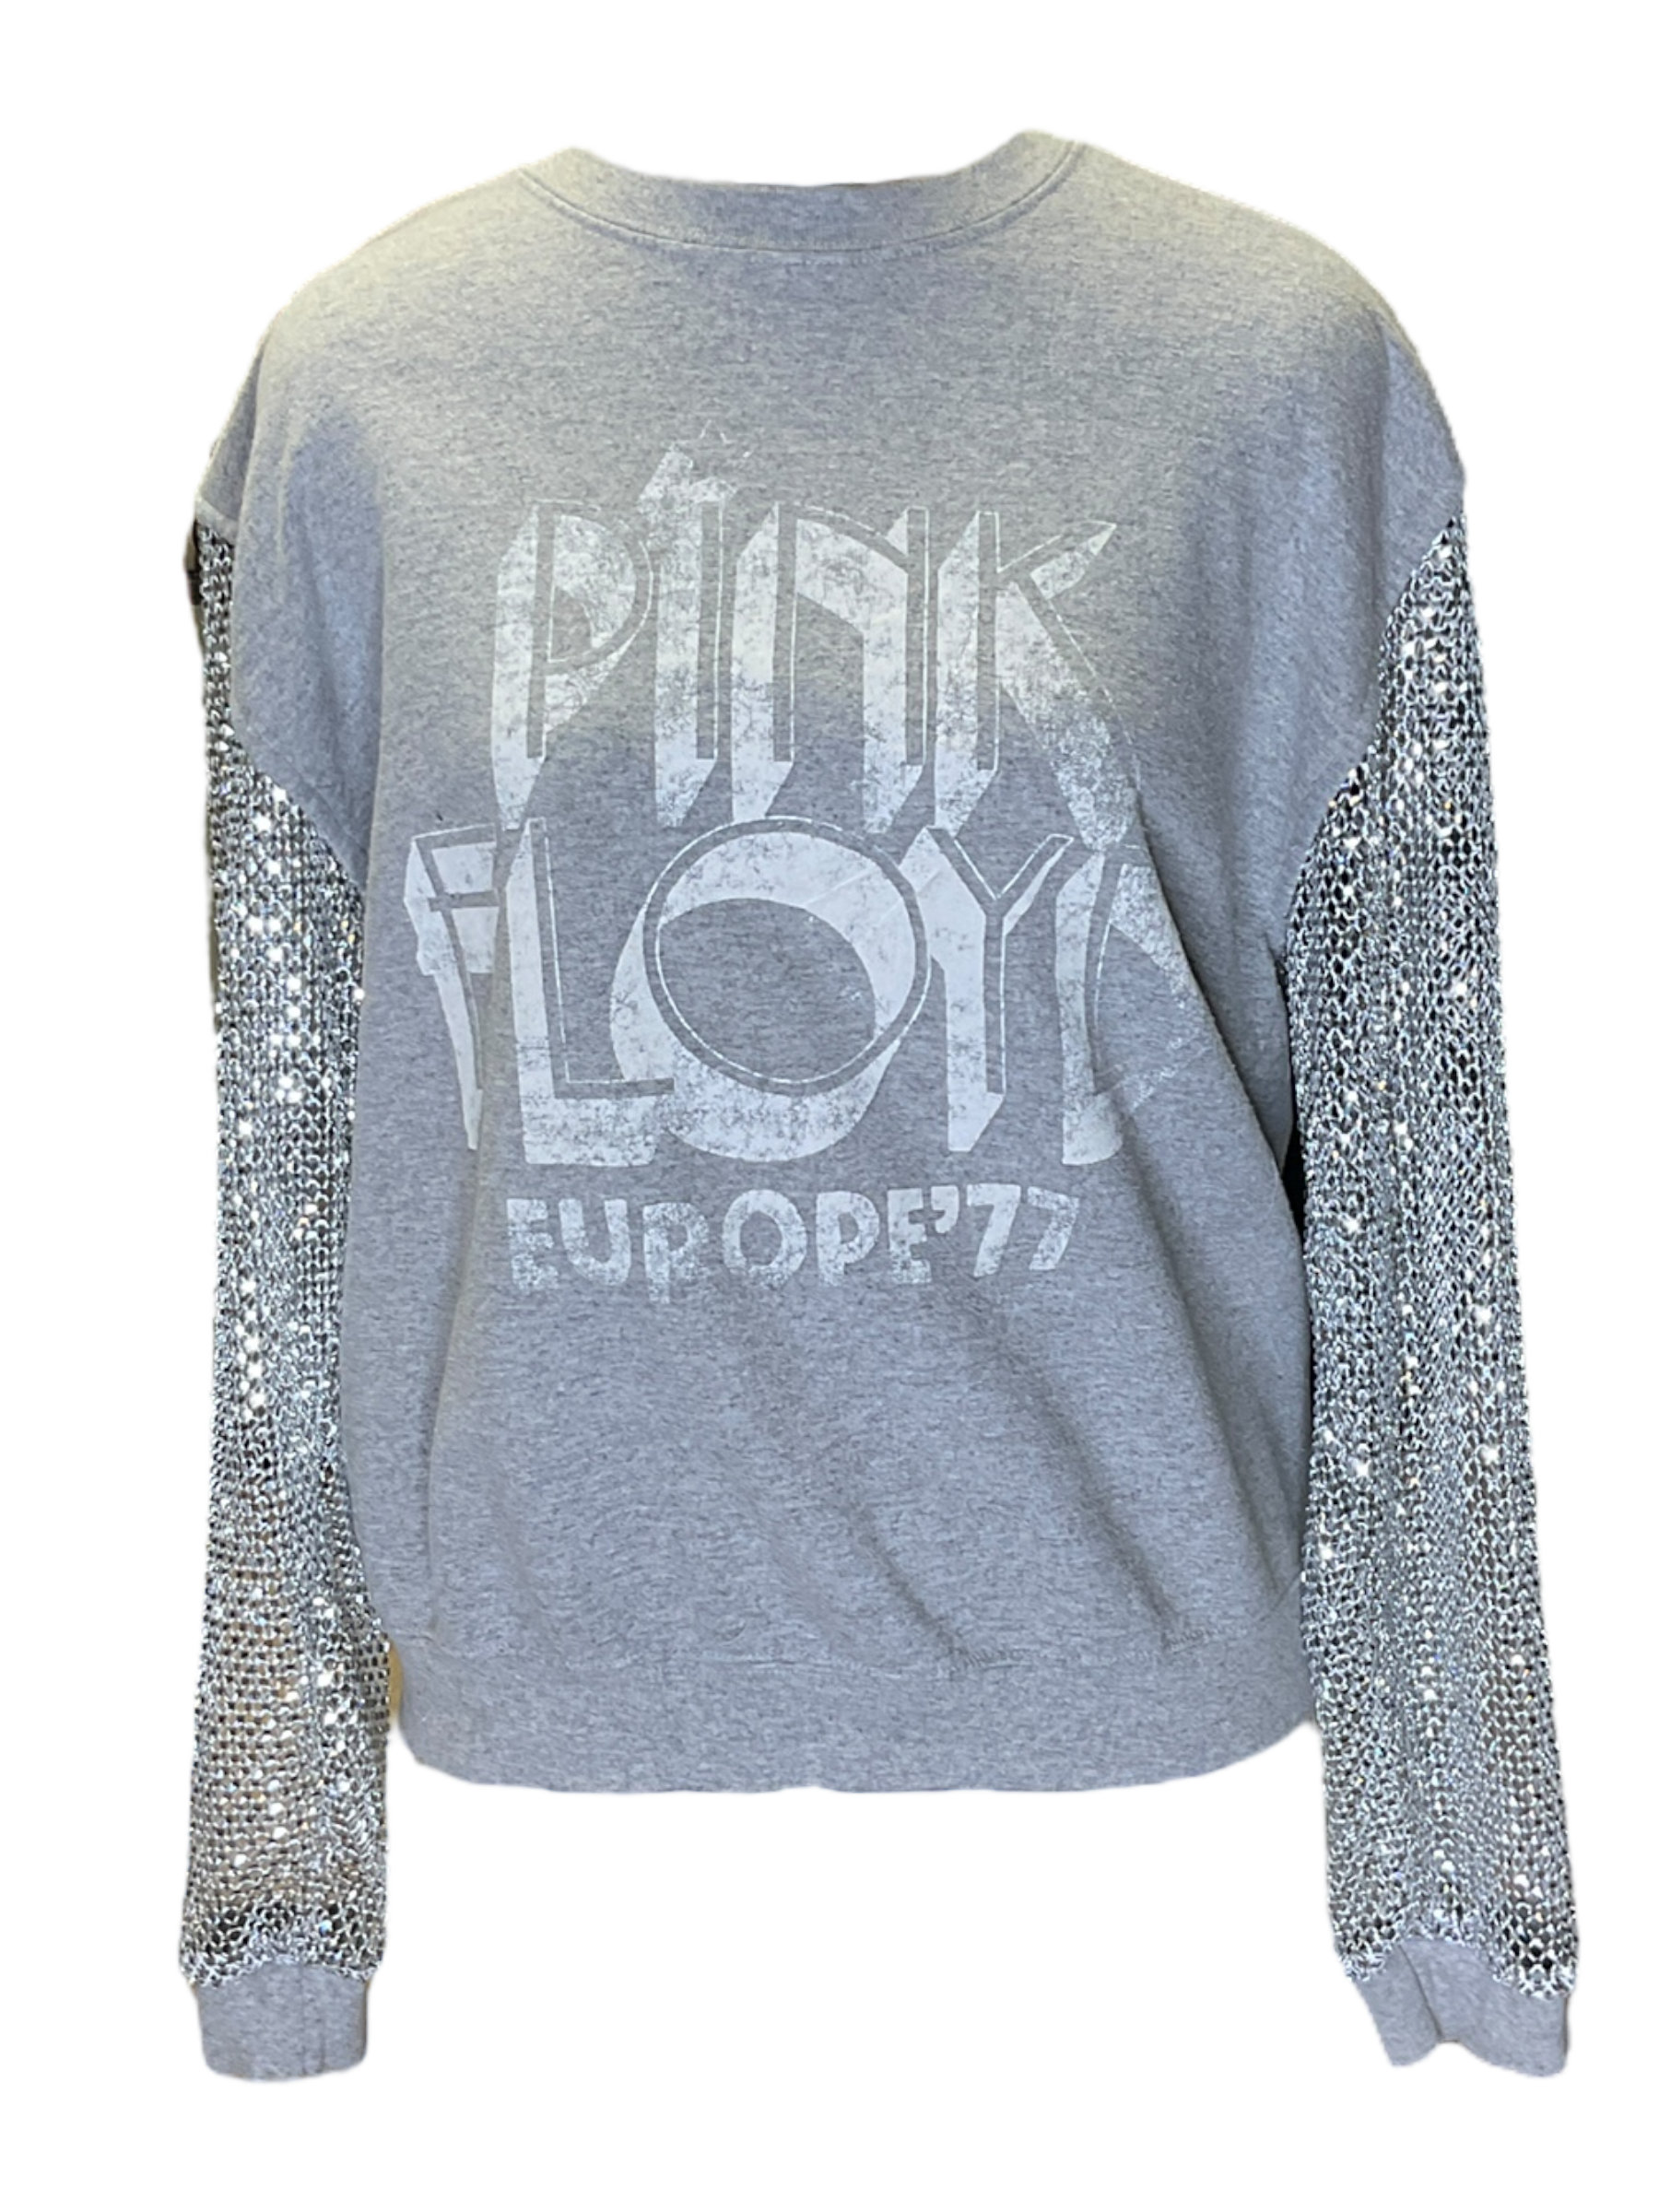 Pink Floyd Chainmail Sweatshirt